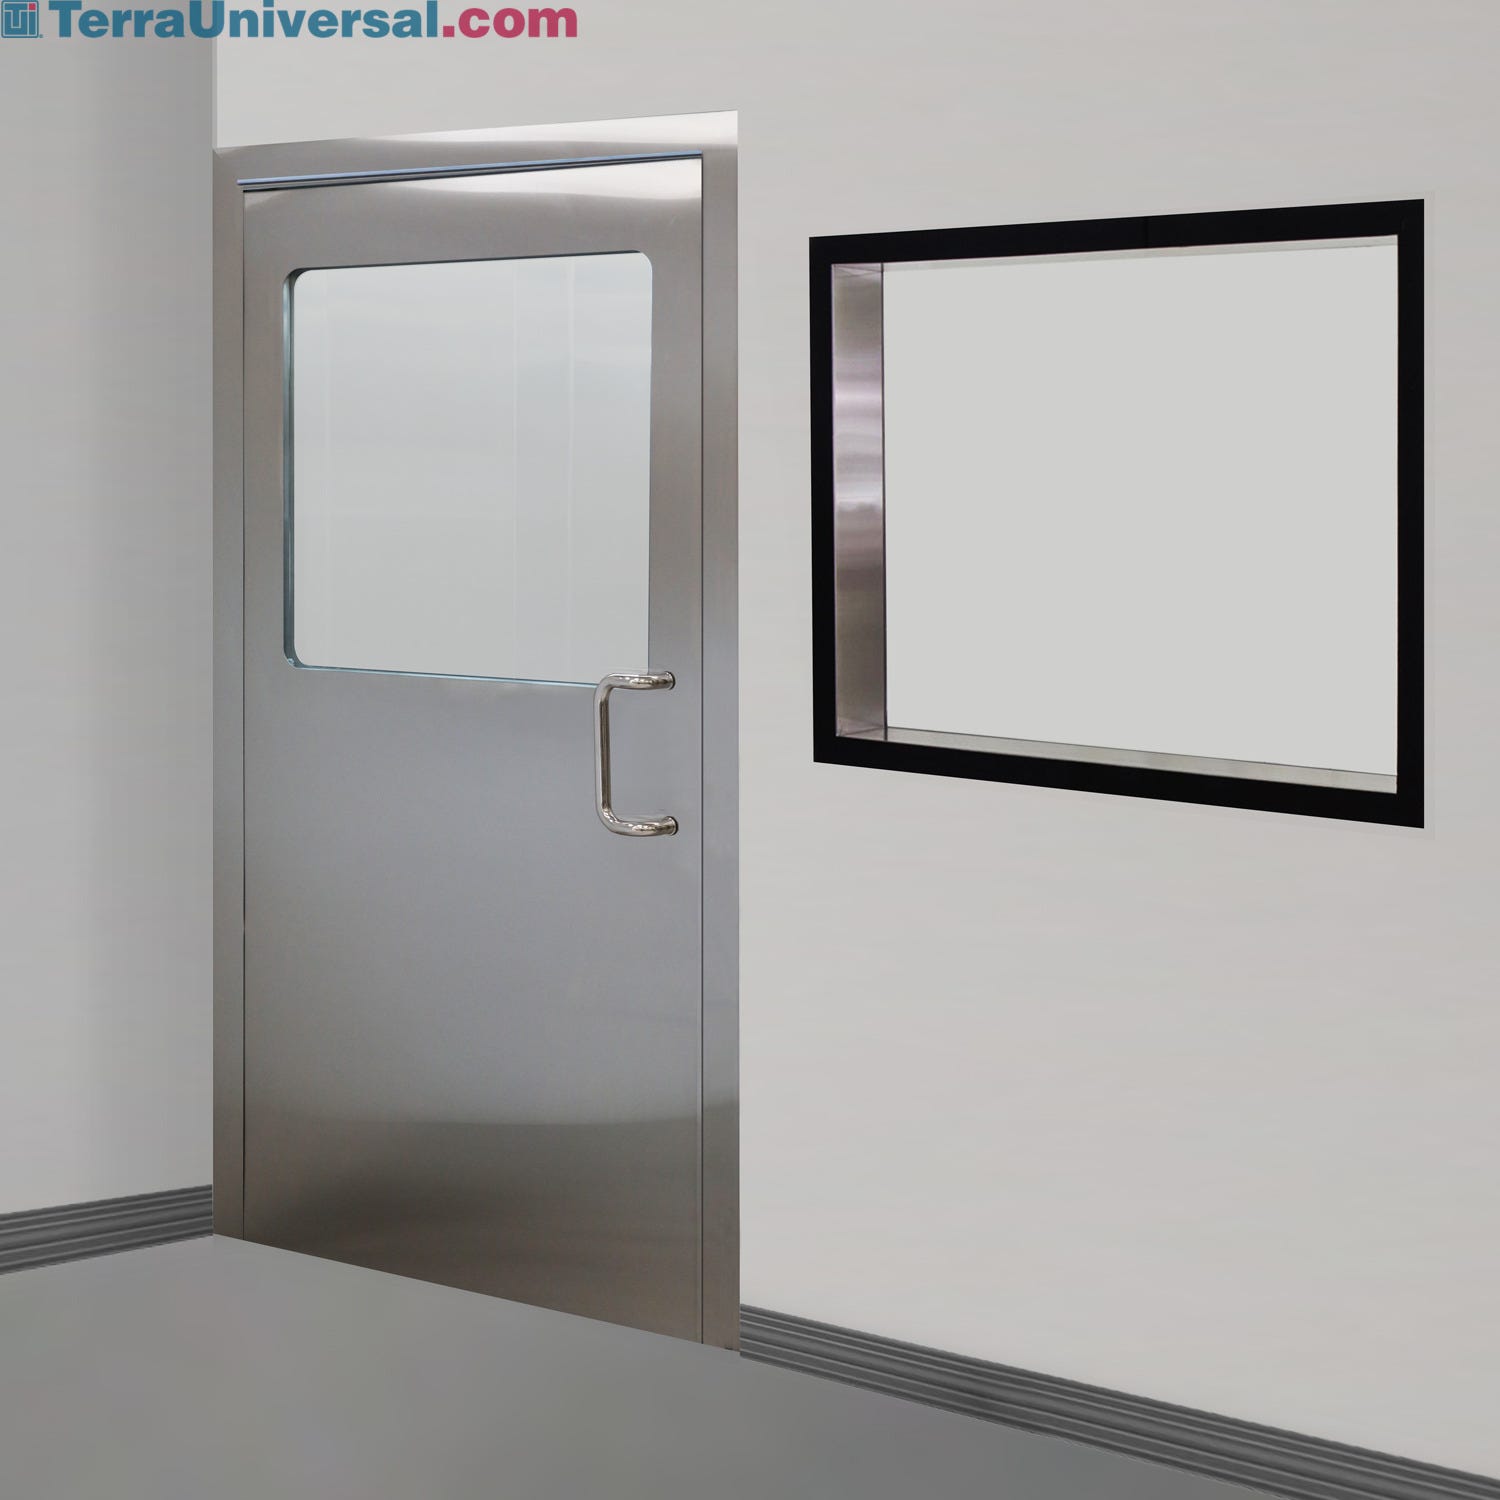 https://www.terrauniversal.com/media/asset-library/cache/original/watermark_h/1/s/t/stainless-steel-automatic-door-half-view-panel-window-HV8A4890-101819.jpg